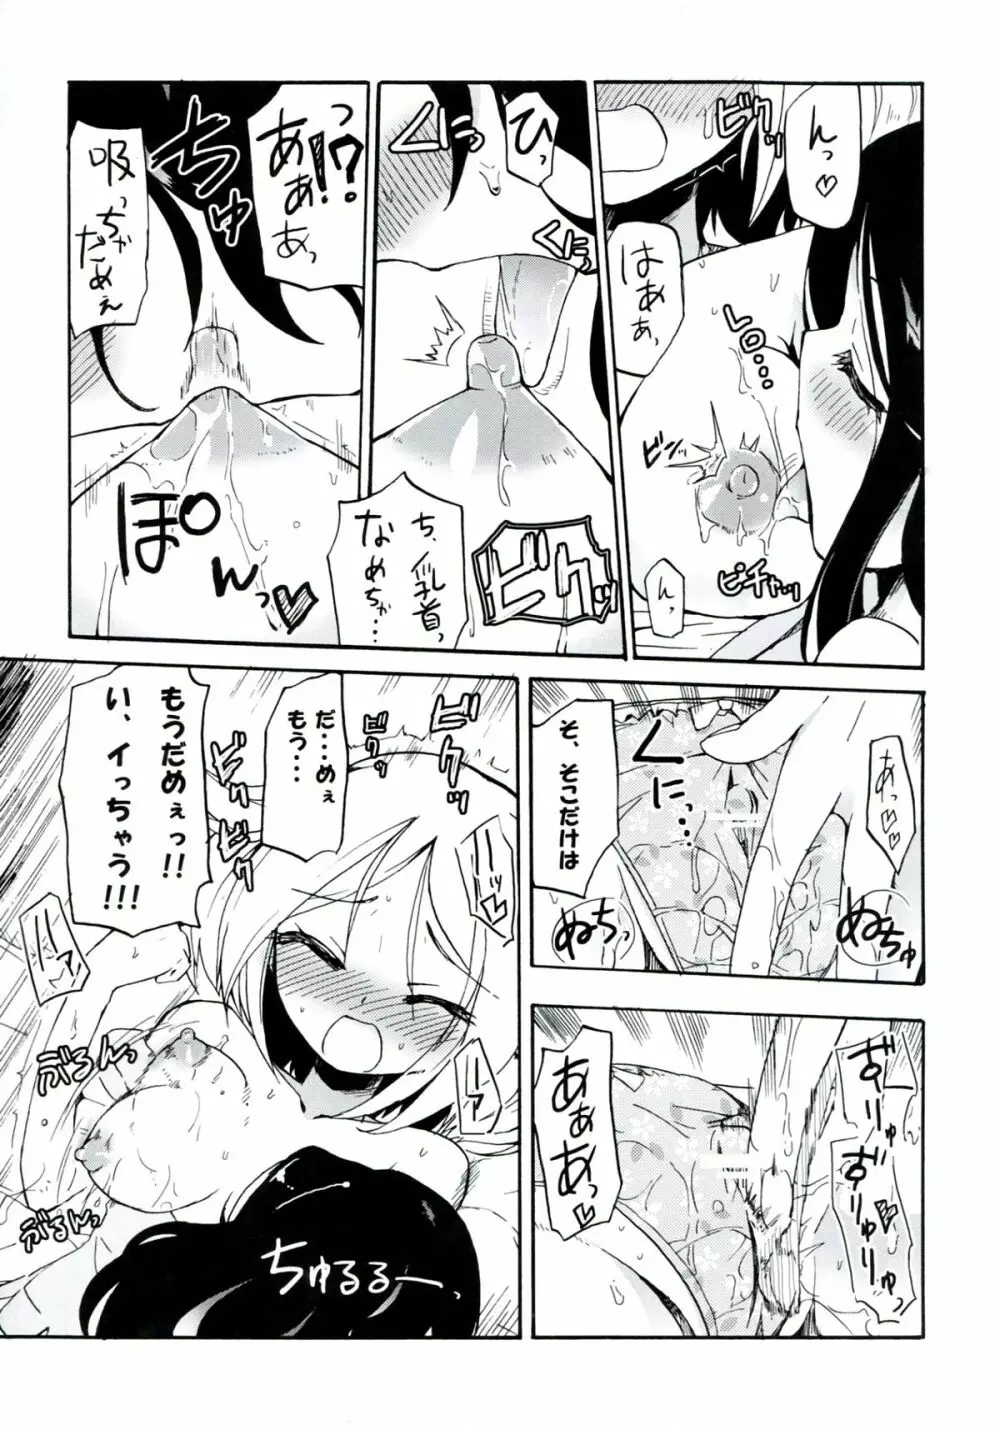 Homuraya Milk ★ Collection 2 - page35